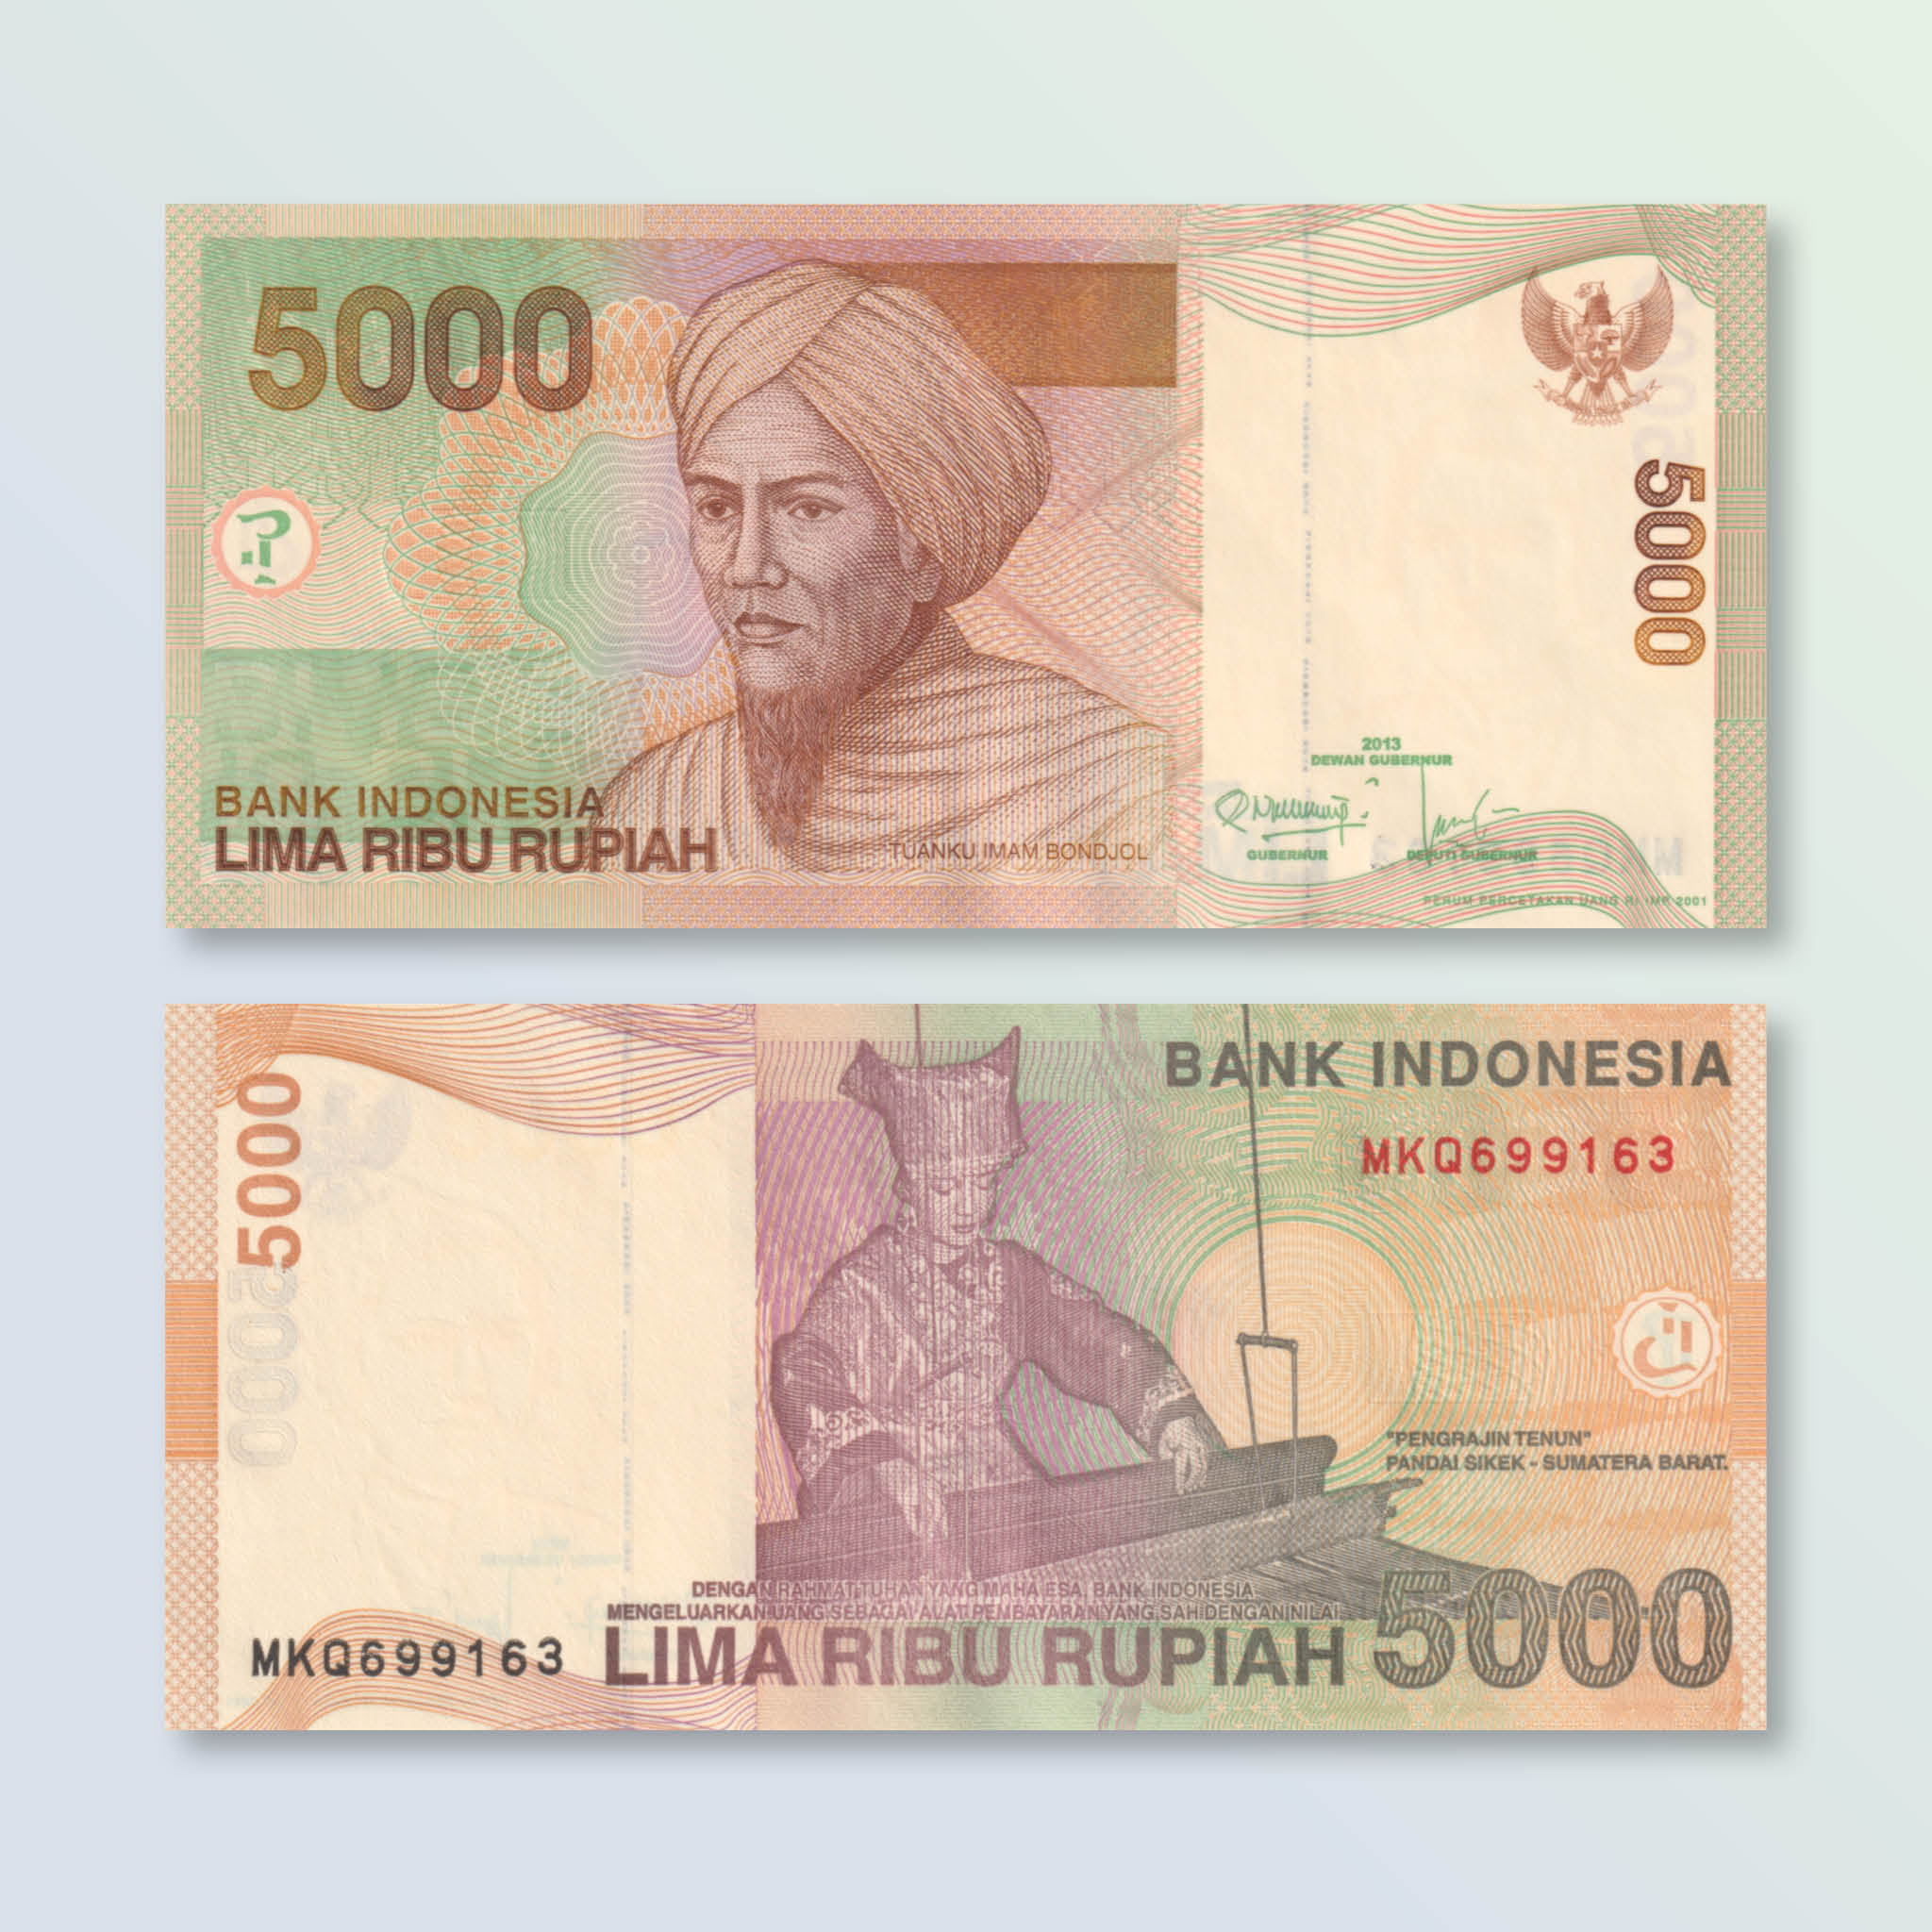 Indonesia 5000 Rupiah, 2013/2001, B599m, P142m, UNC - Robert's World Money - World Banknotes